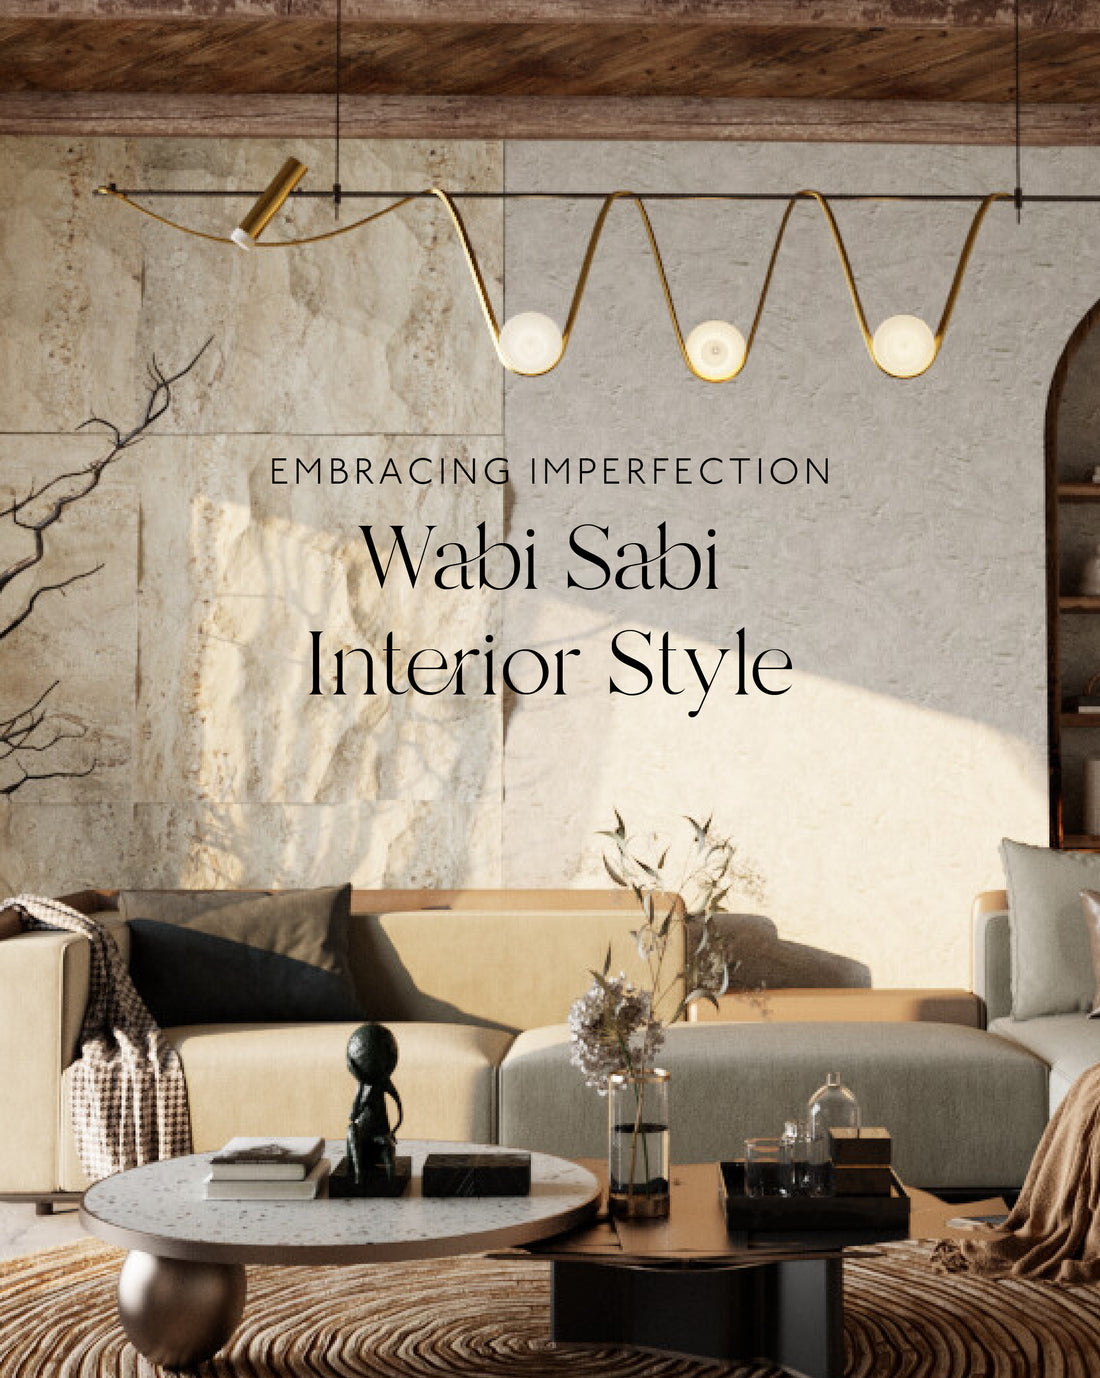 Embracing Imperfection: Wabi Sabi Interior Style